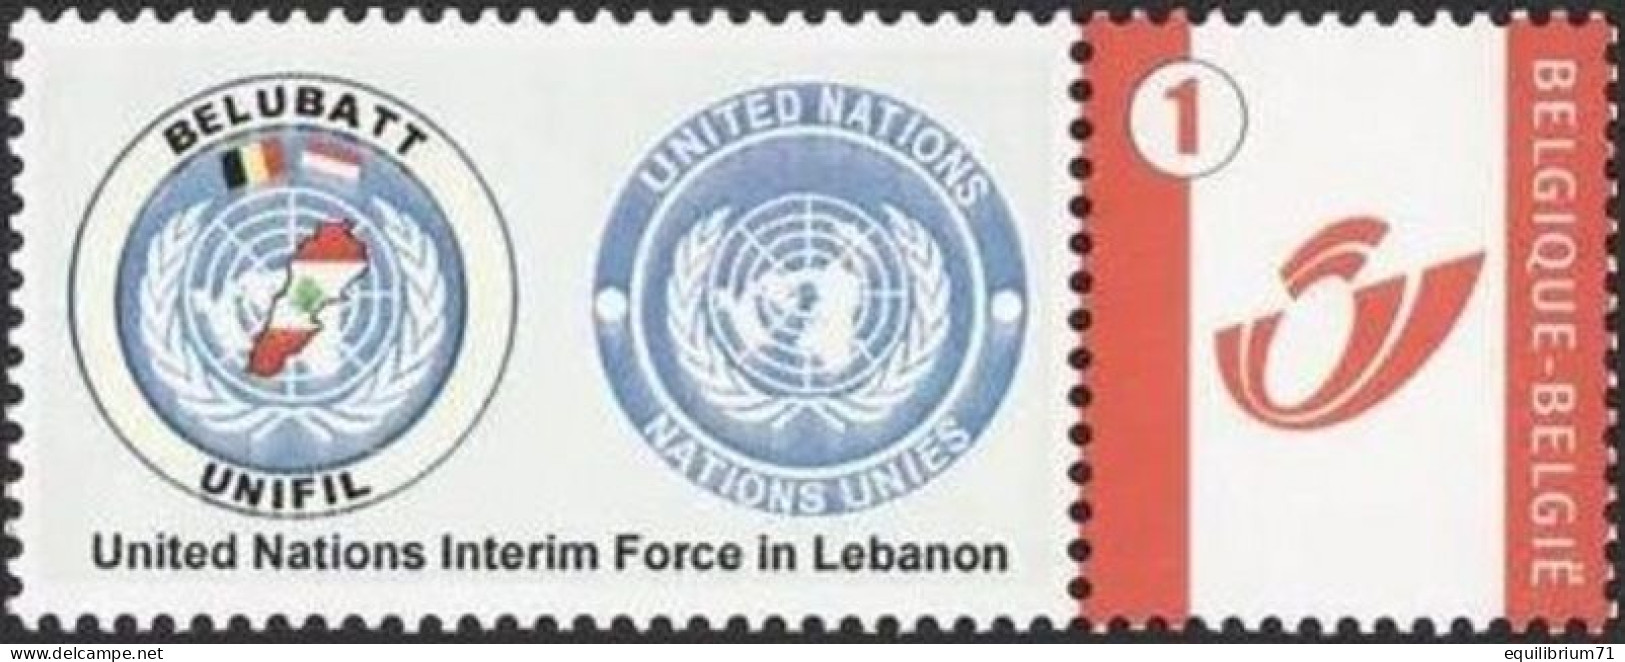 DUOSTAMP/MYSTAMP** - BELUBATT - UNIFIL - United Nations Interim Force In Lebanon - UNITED NATIONS / NATIONS UNIES - Mint